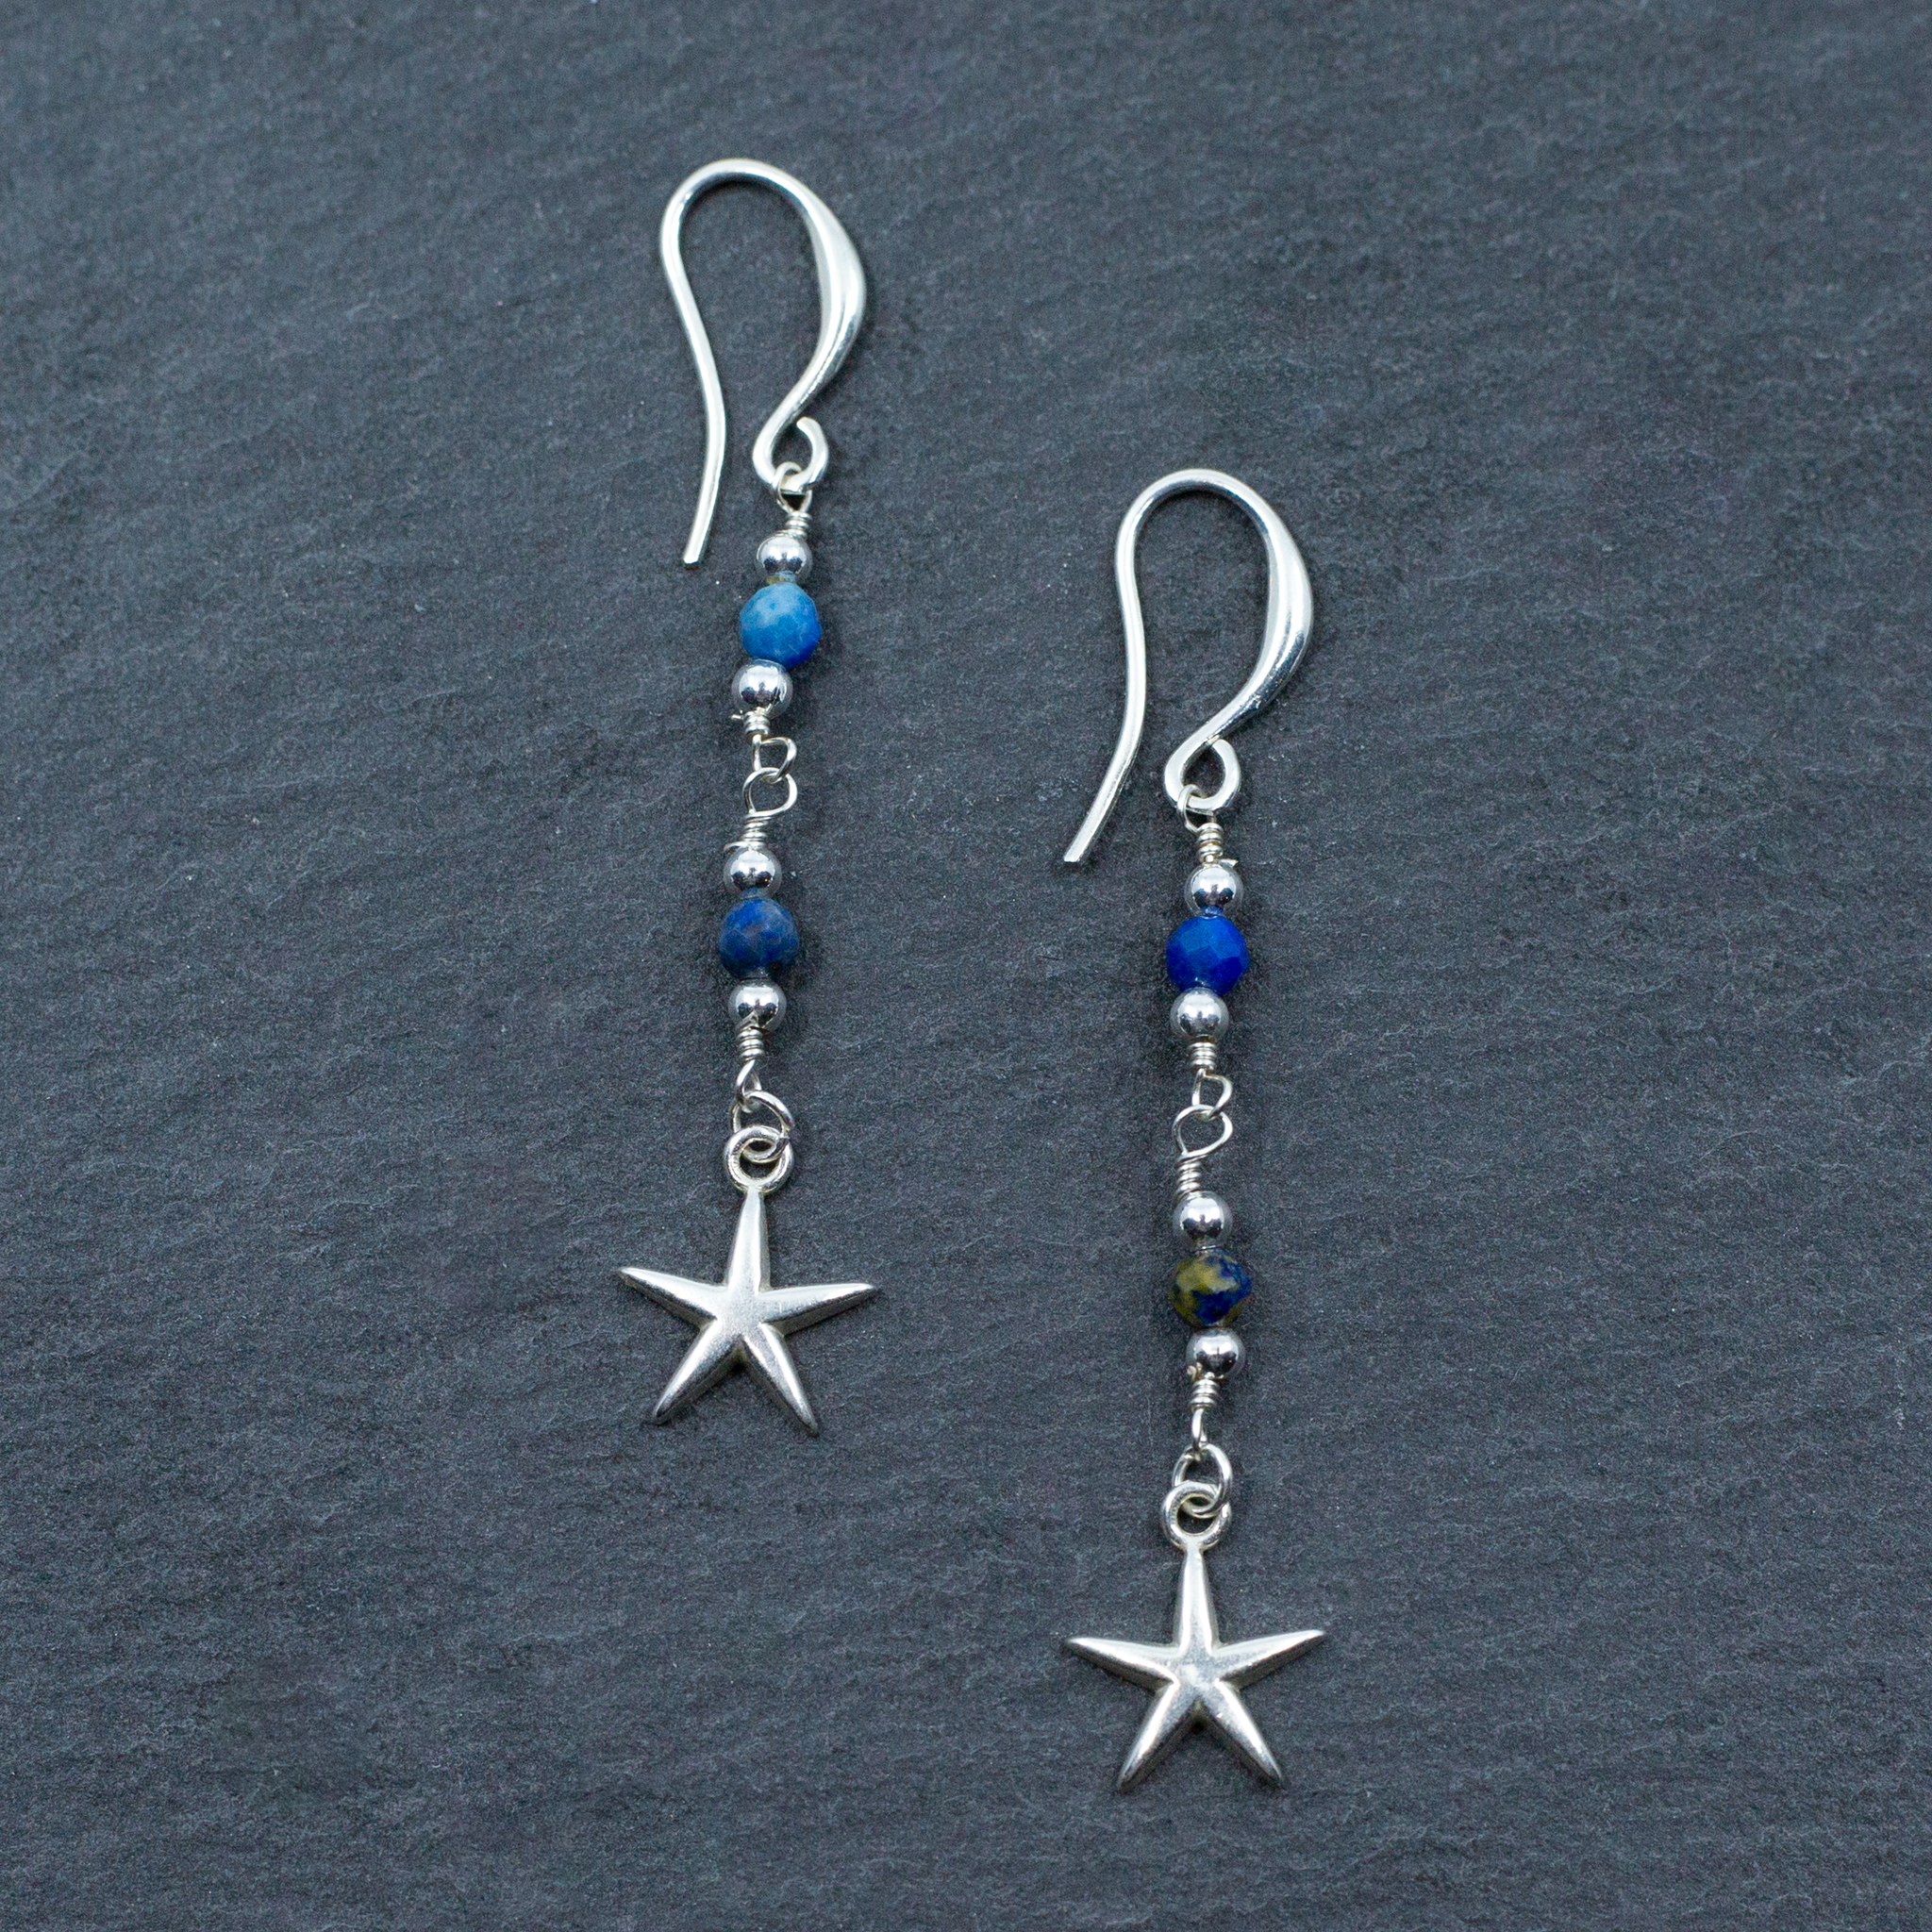 Blue Crystal Charm Earrings In Silver Plate